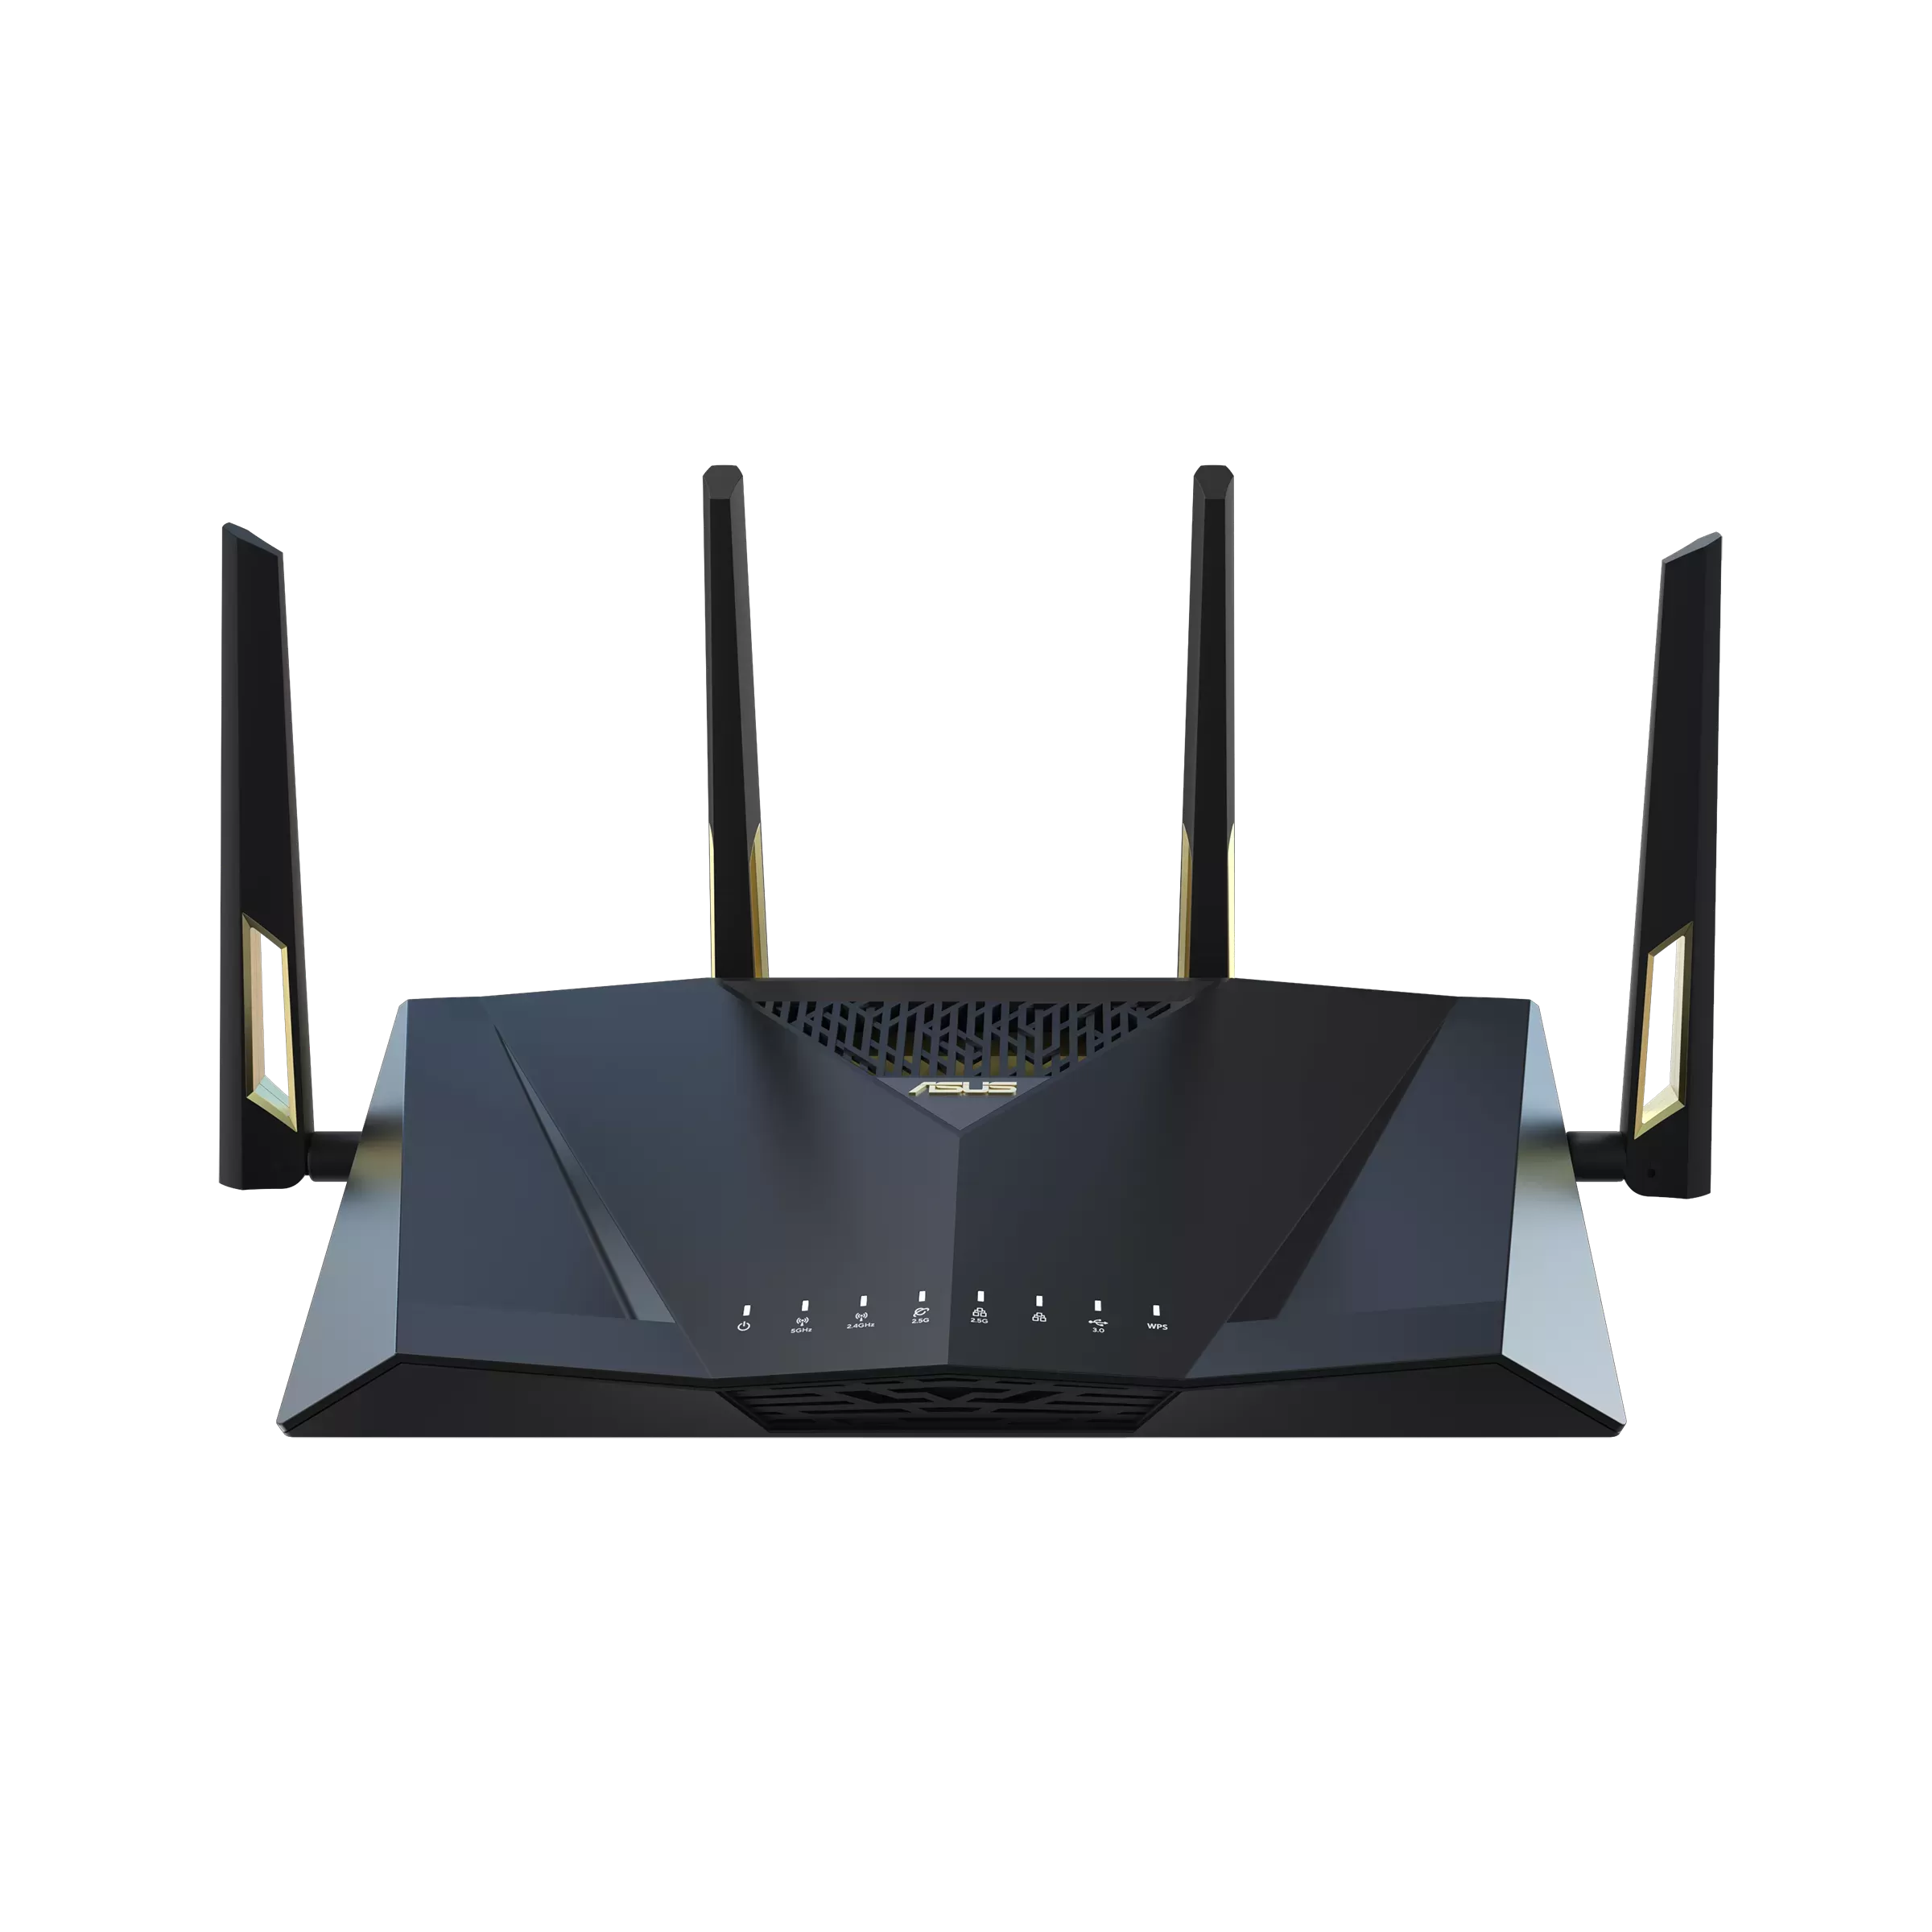 Router asus rt-ax88u pro wan:1x2.5gigabit wifi:802.11ax